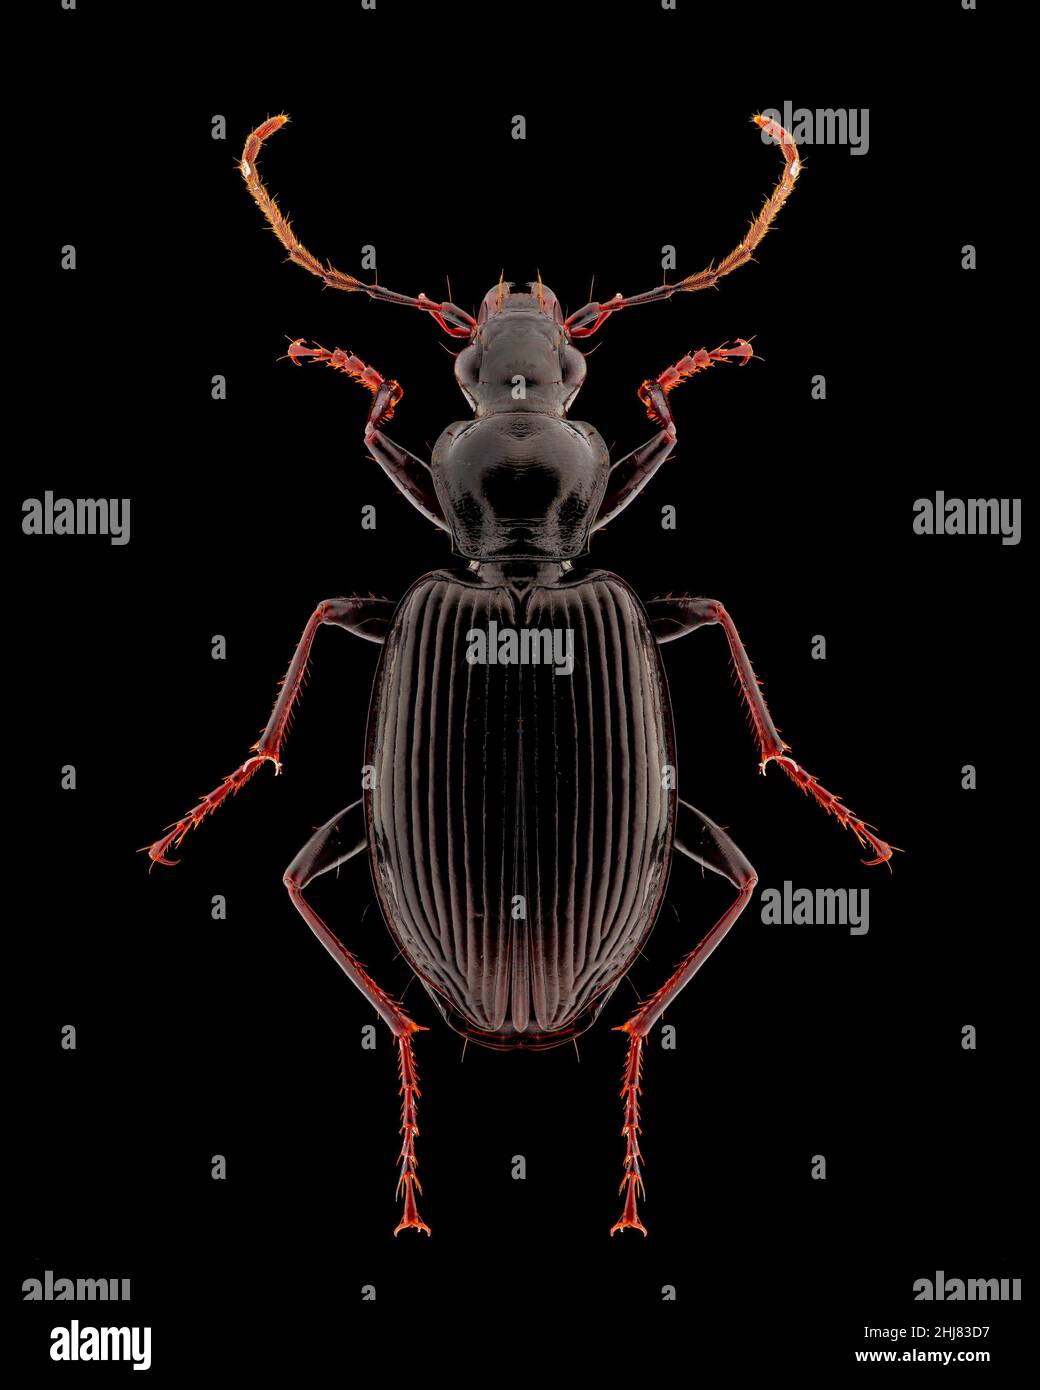 Black beetle entomology specimen with spreaded, legs and antennae isolated on pure black background. Studio lighting. Macro photography. Stock Photo